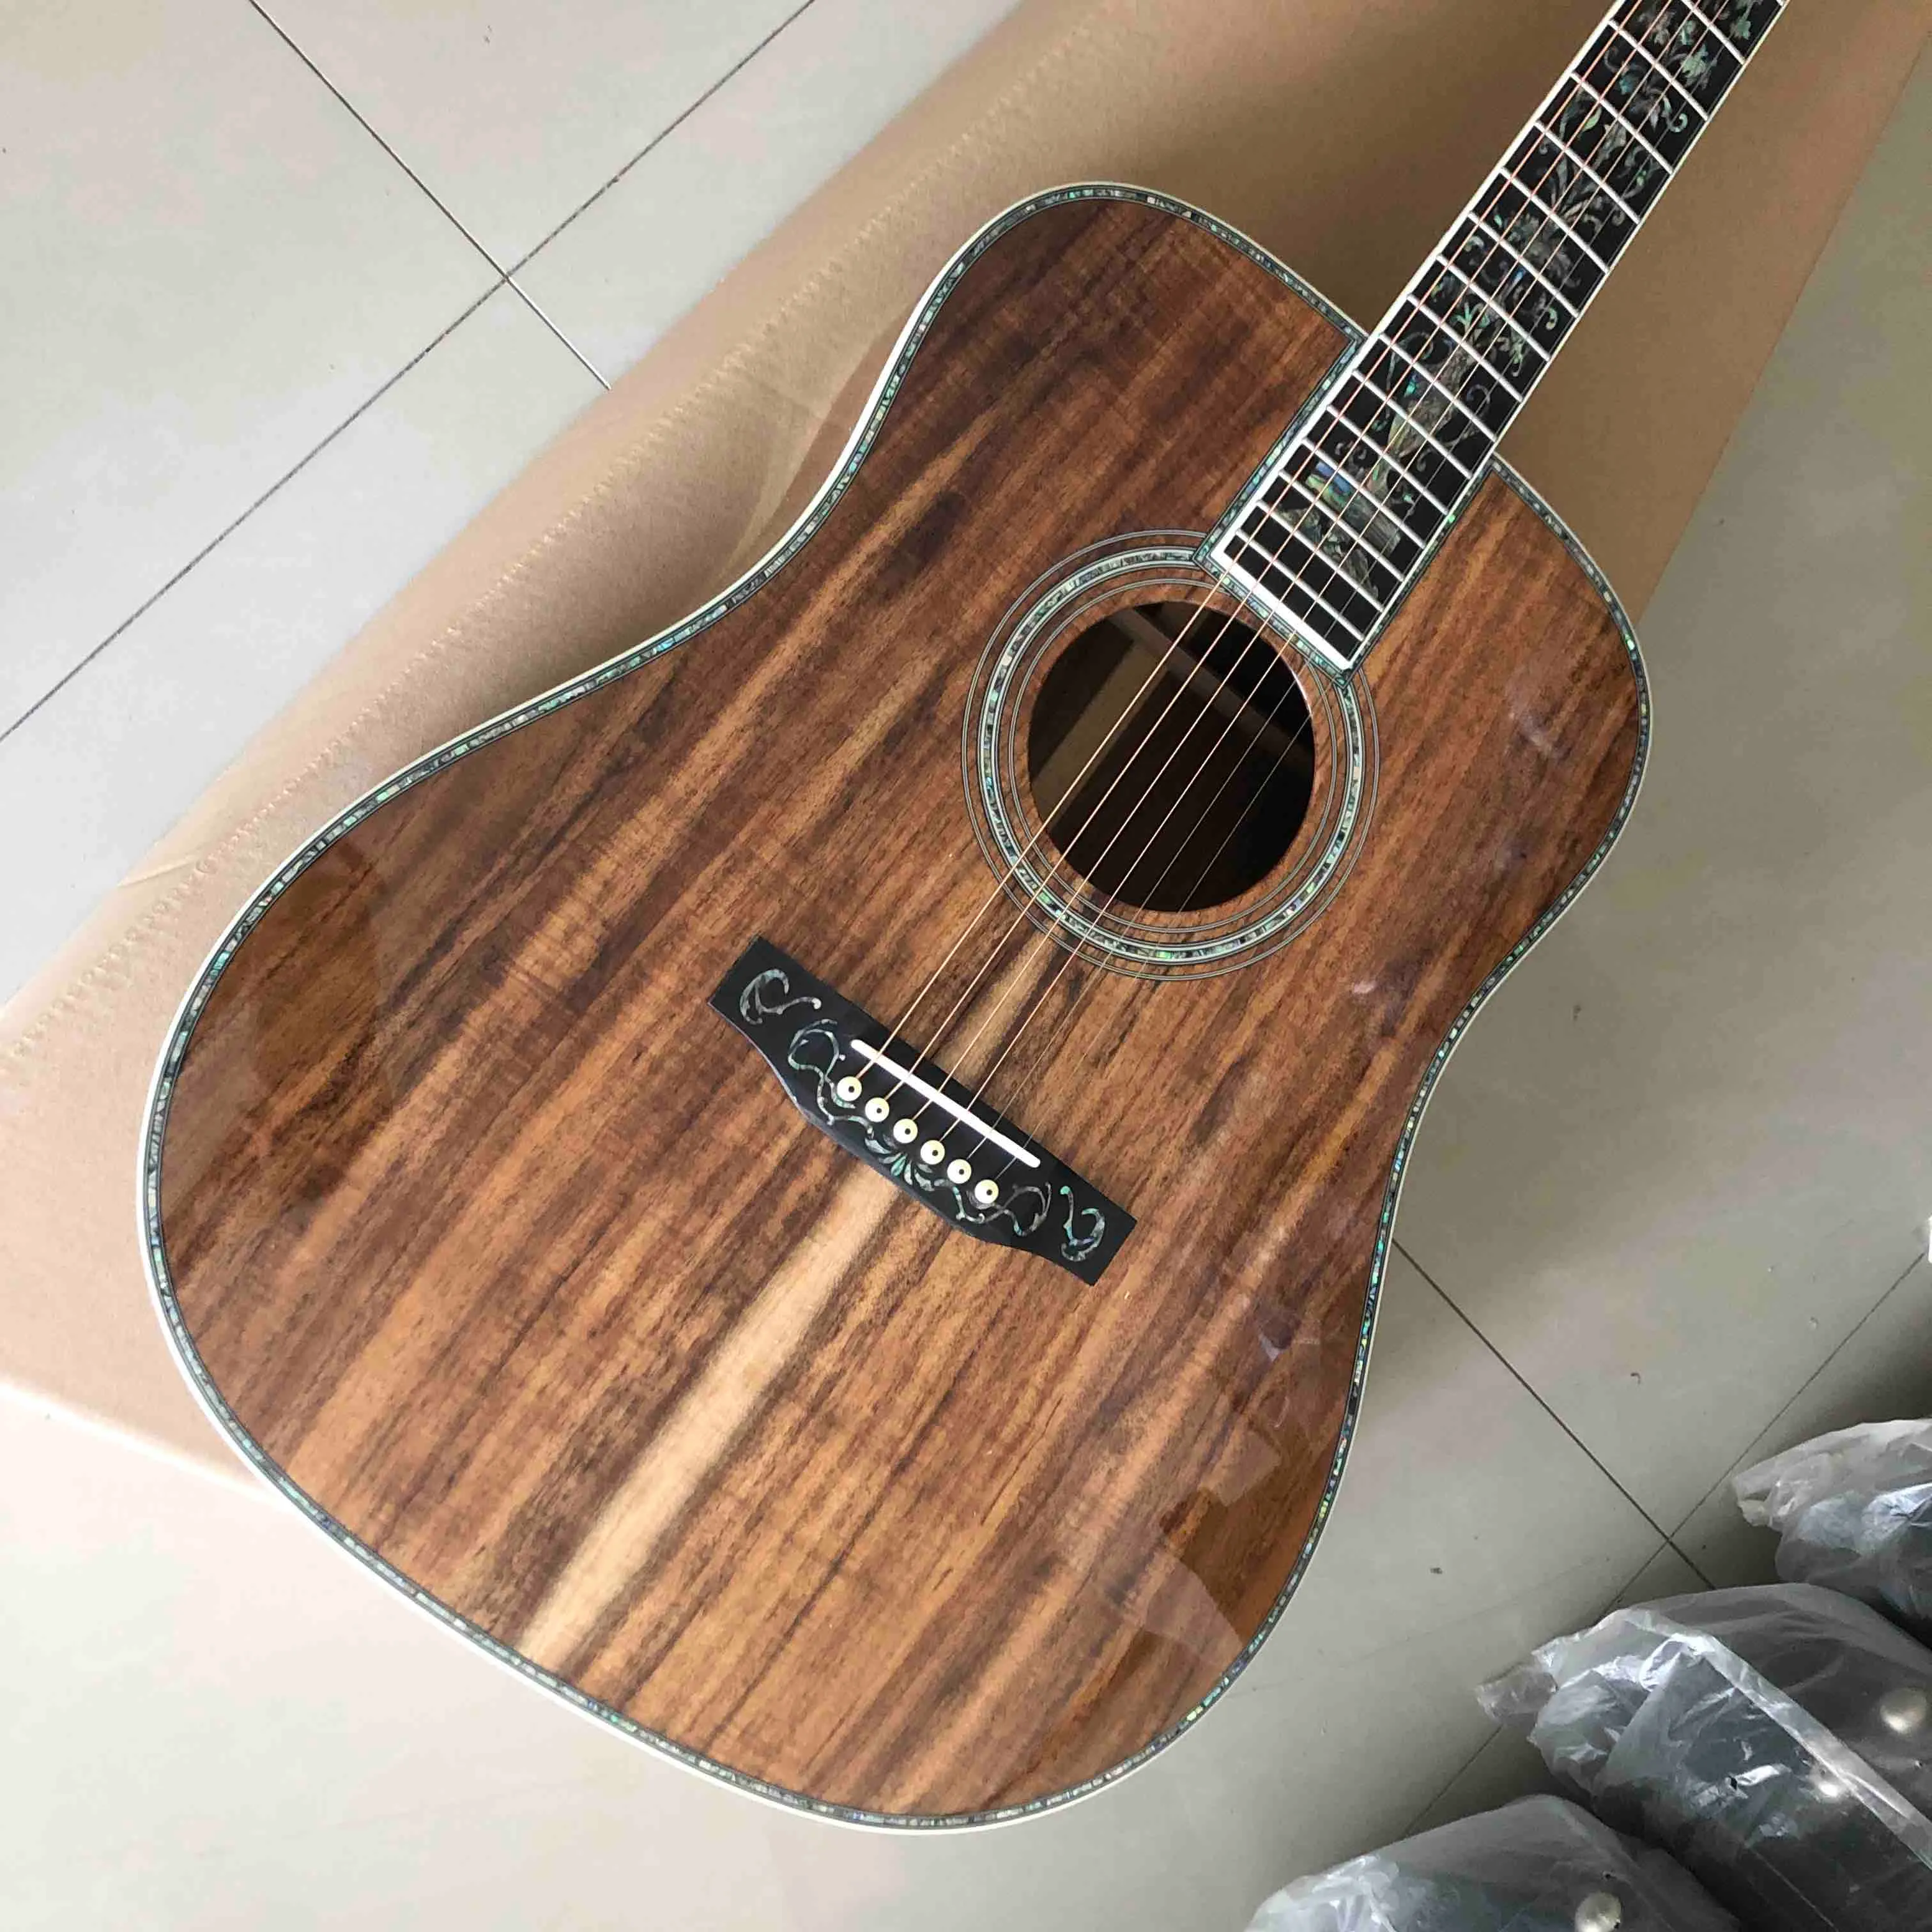 Custom Real Abalone Tree Life Inlays Solid KOA Wood Top Acoustic Guitar D Body 41 Inch Ebony Fingerboard